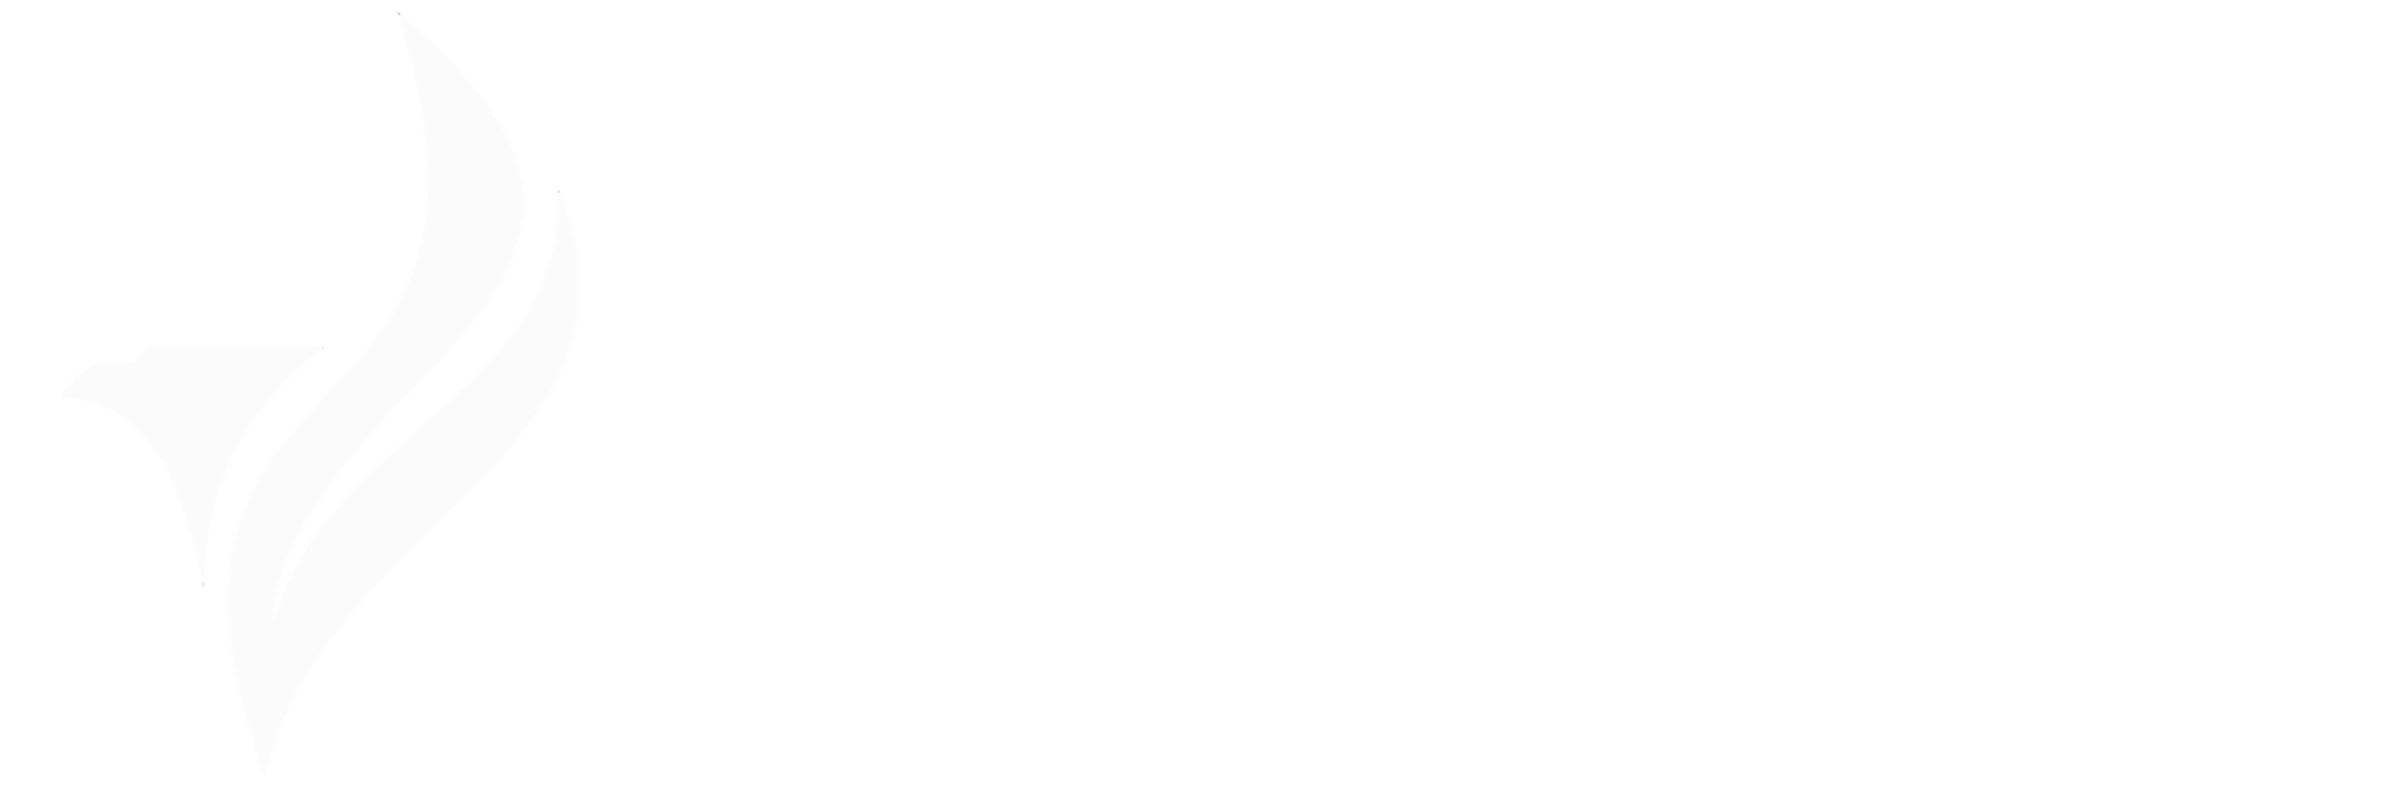 Mailercare